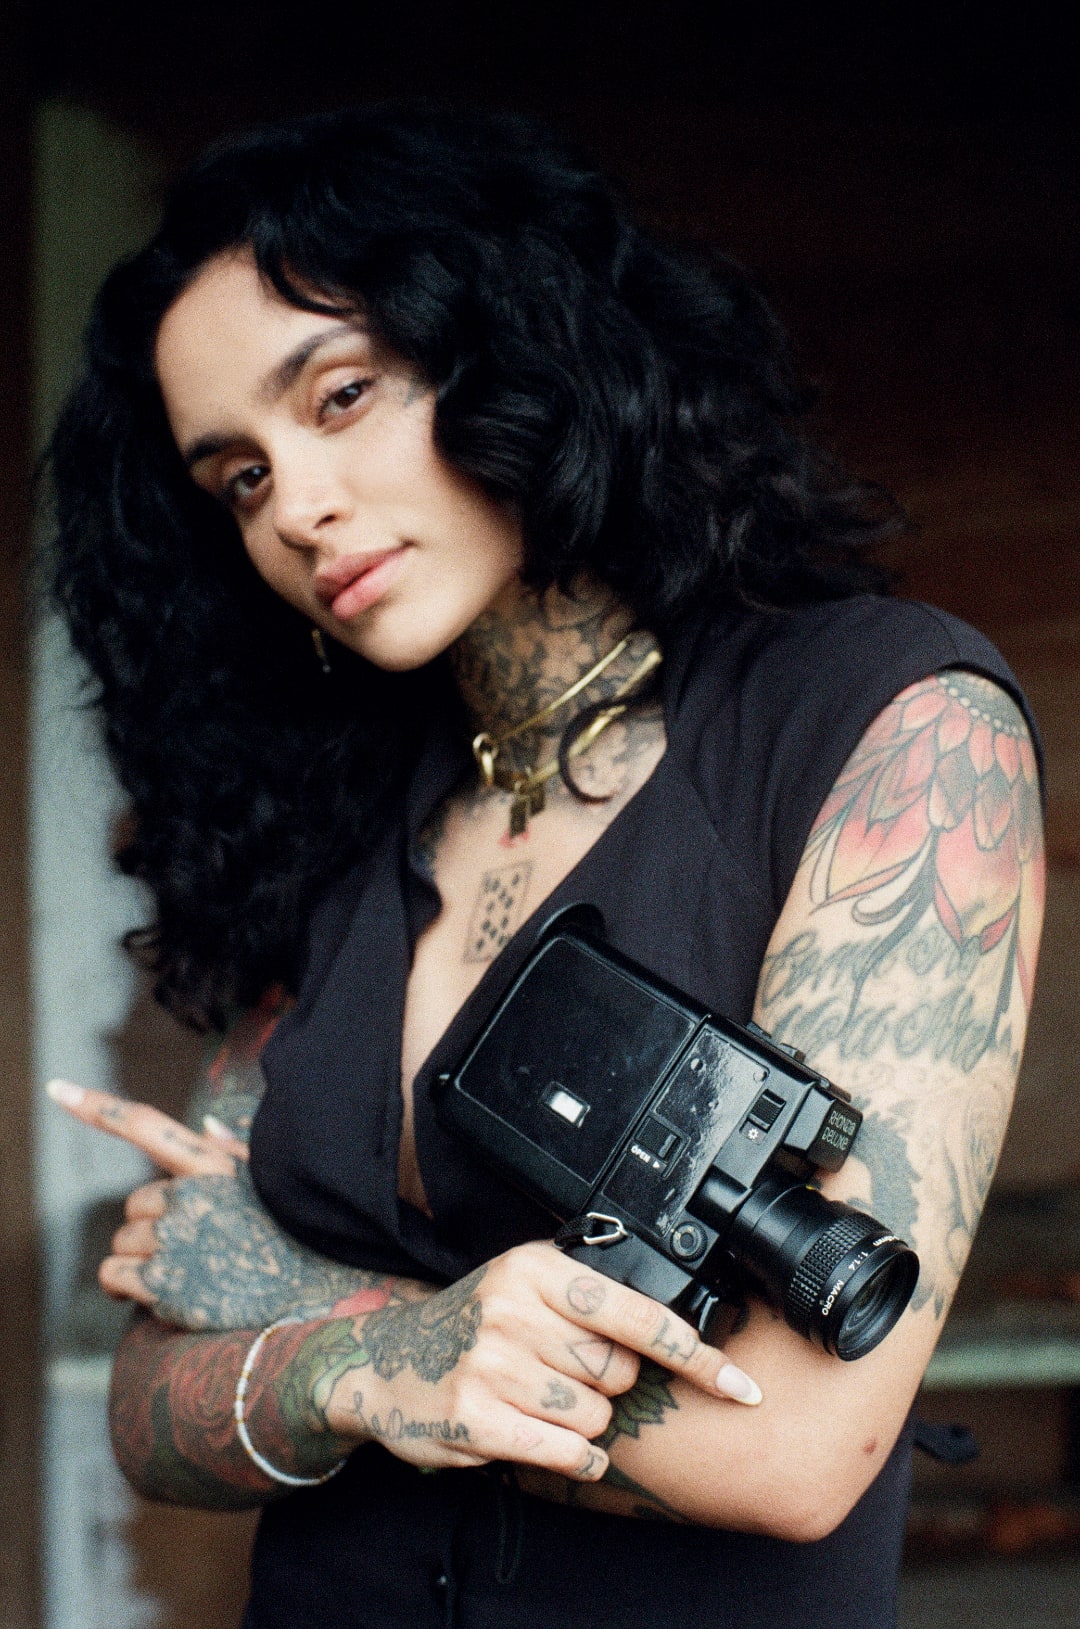 Kehlani holding a camera